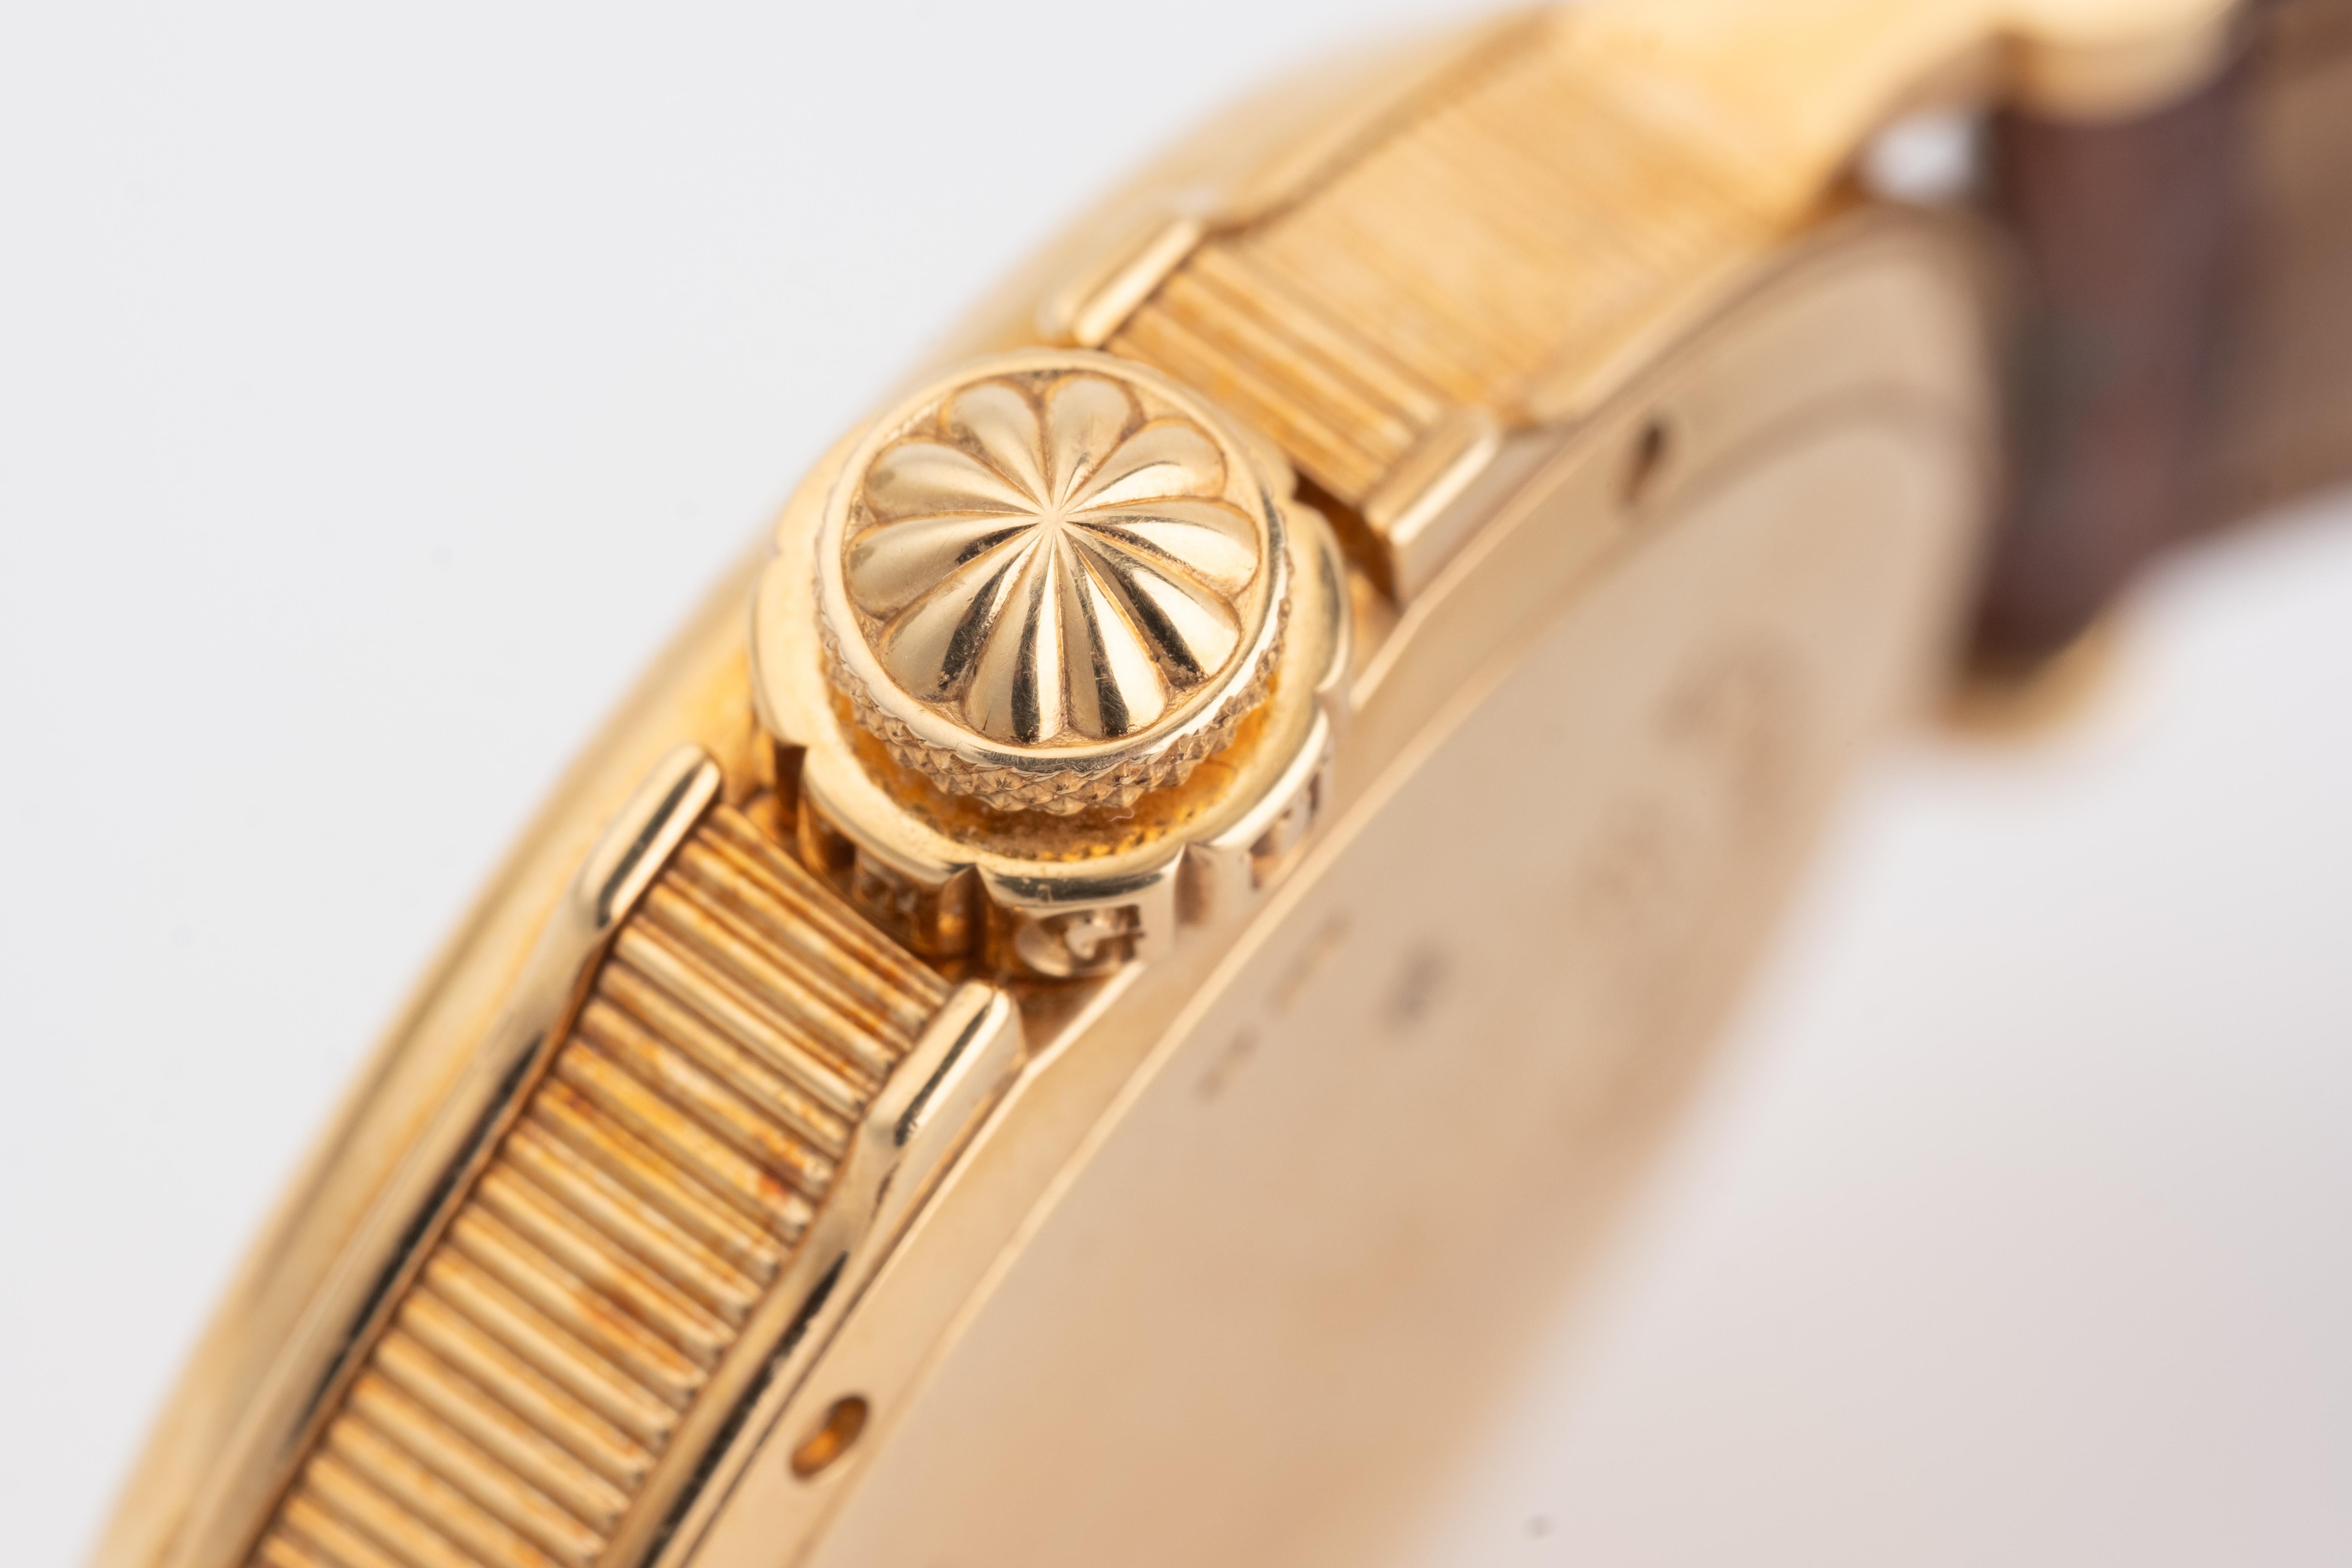 Breguet 18K Gold Automatic Worldtime Wristwatch For Sale 2